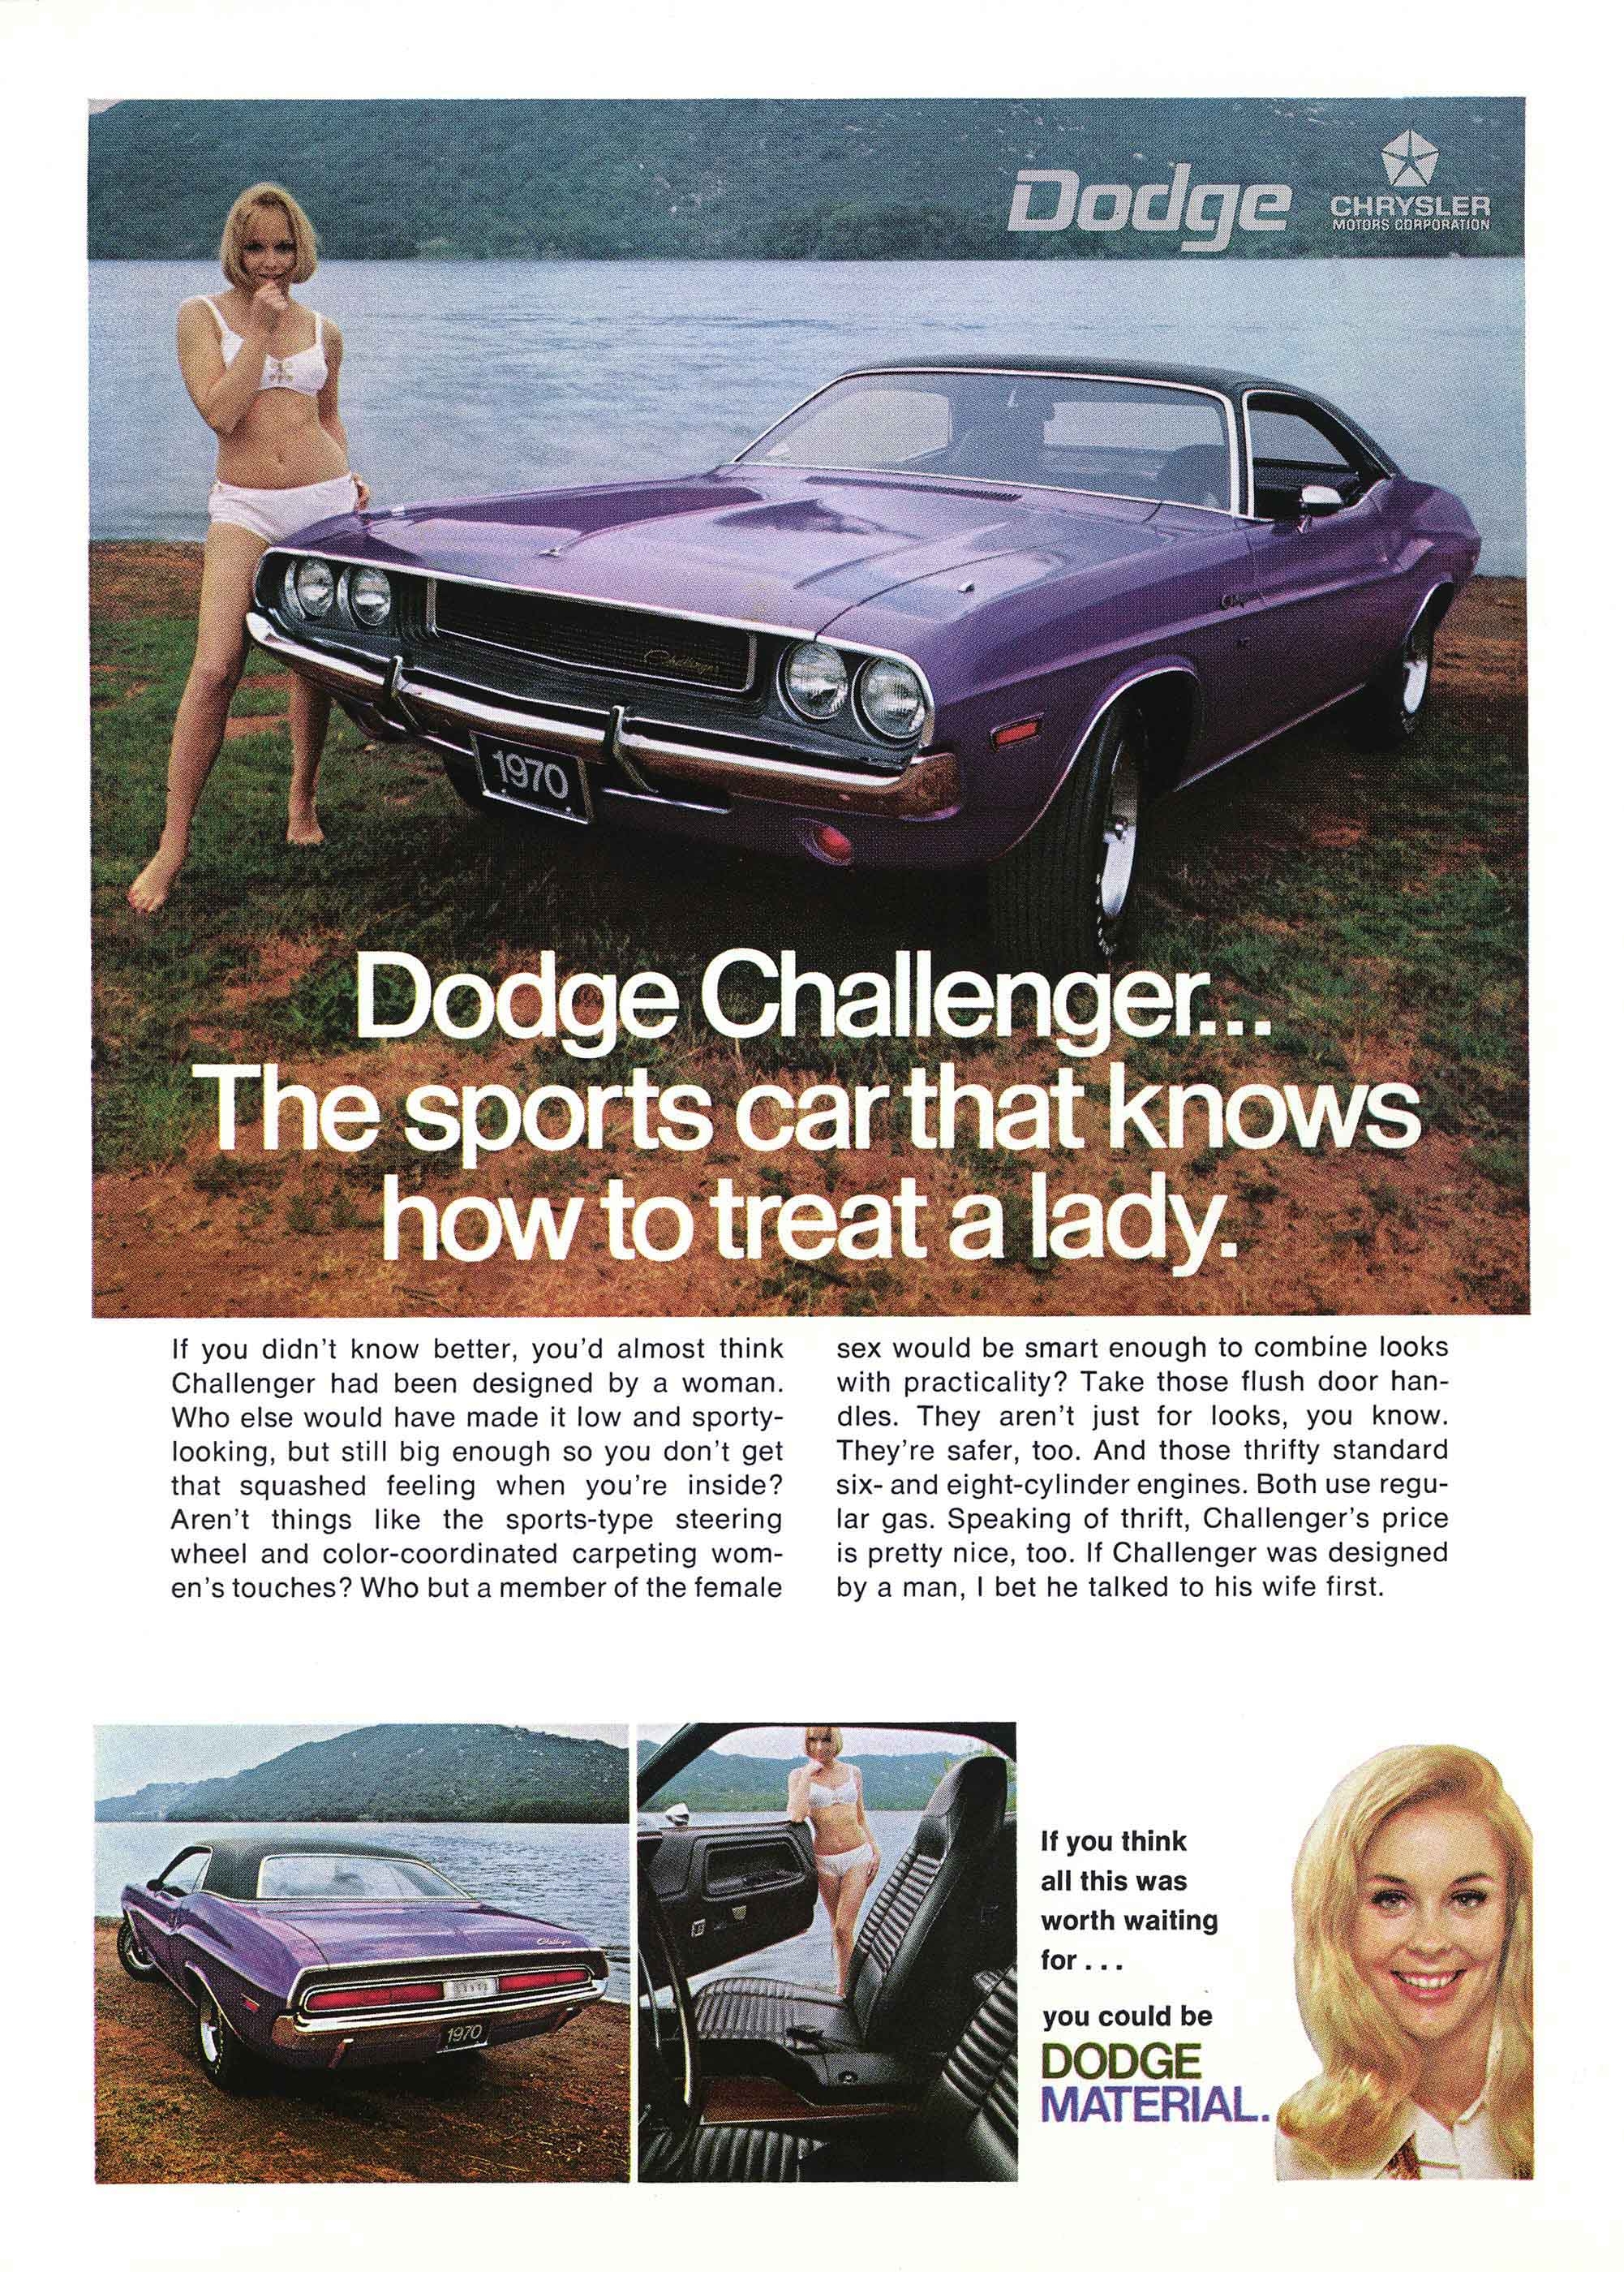 1970 Dodge Challenger advertisement. Lovely ladies